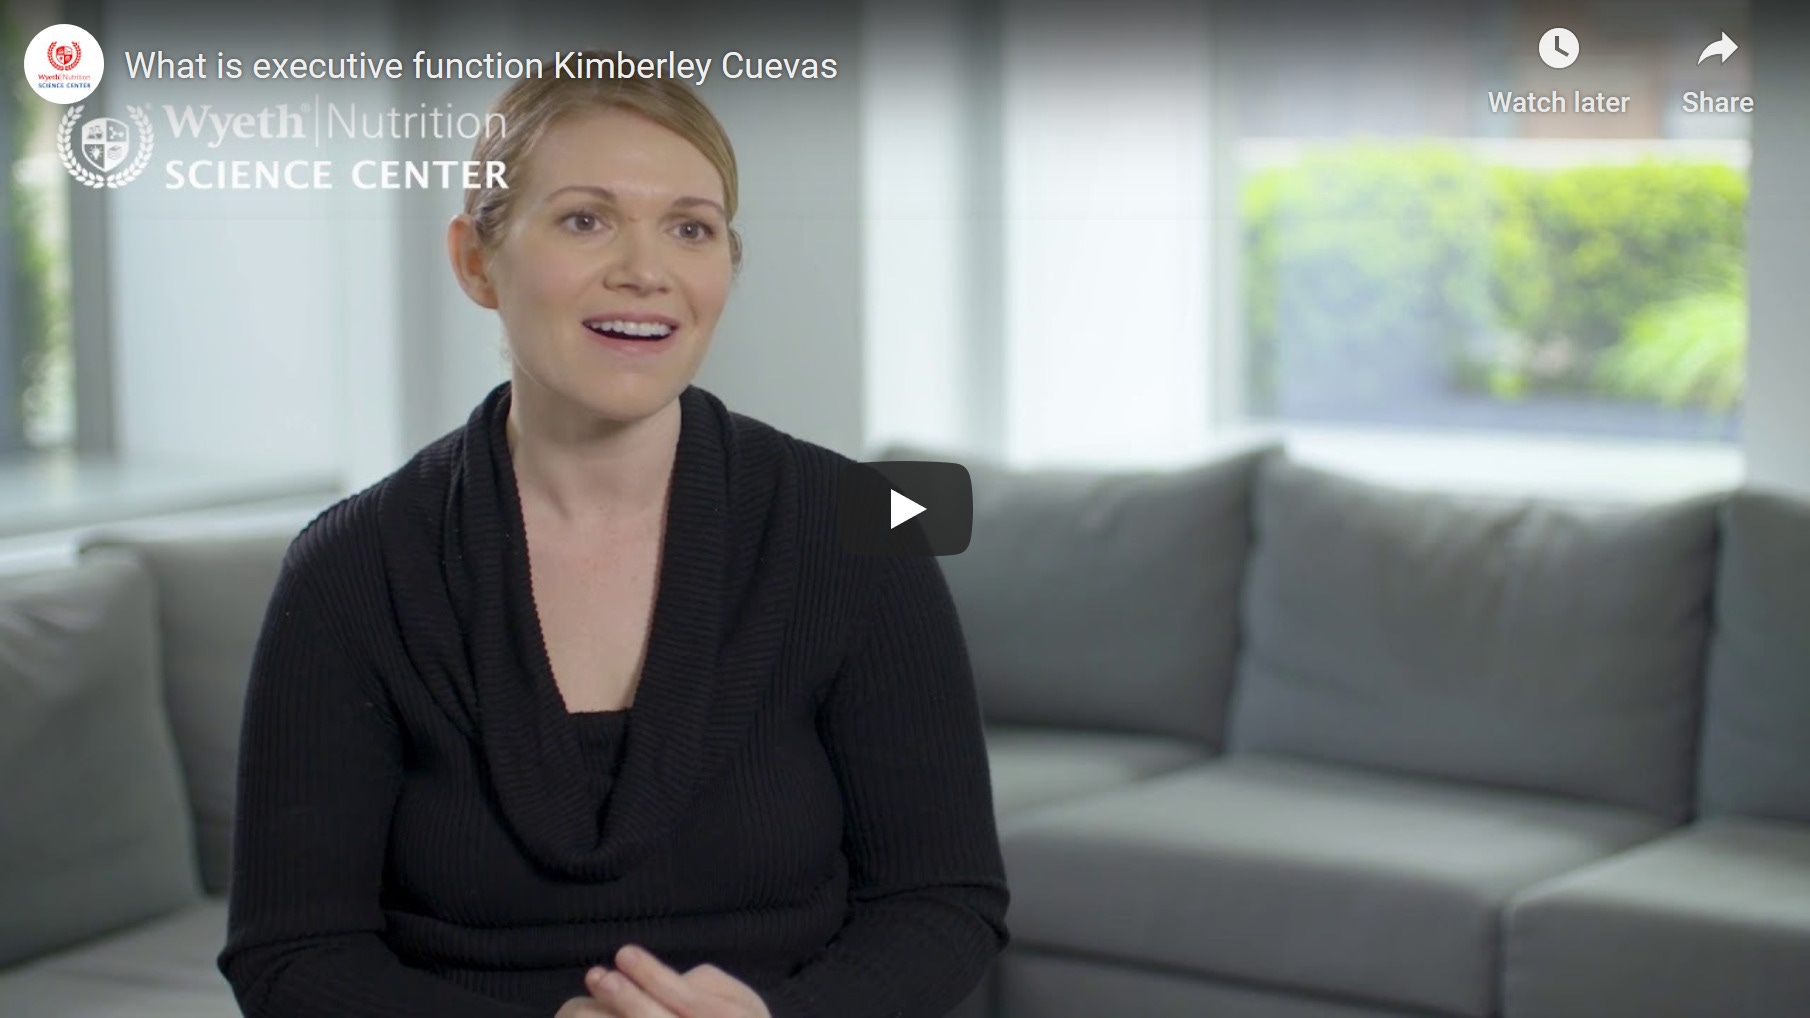 What is executive function - Prof. Kimberley Cuevas